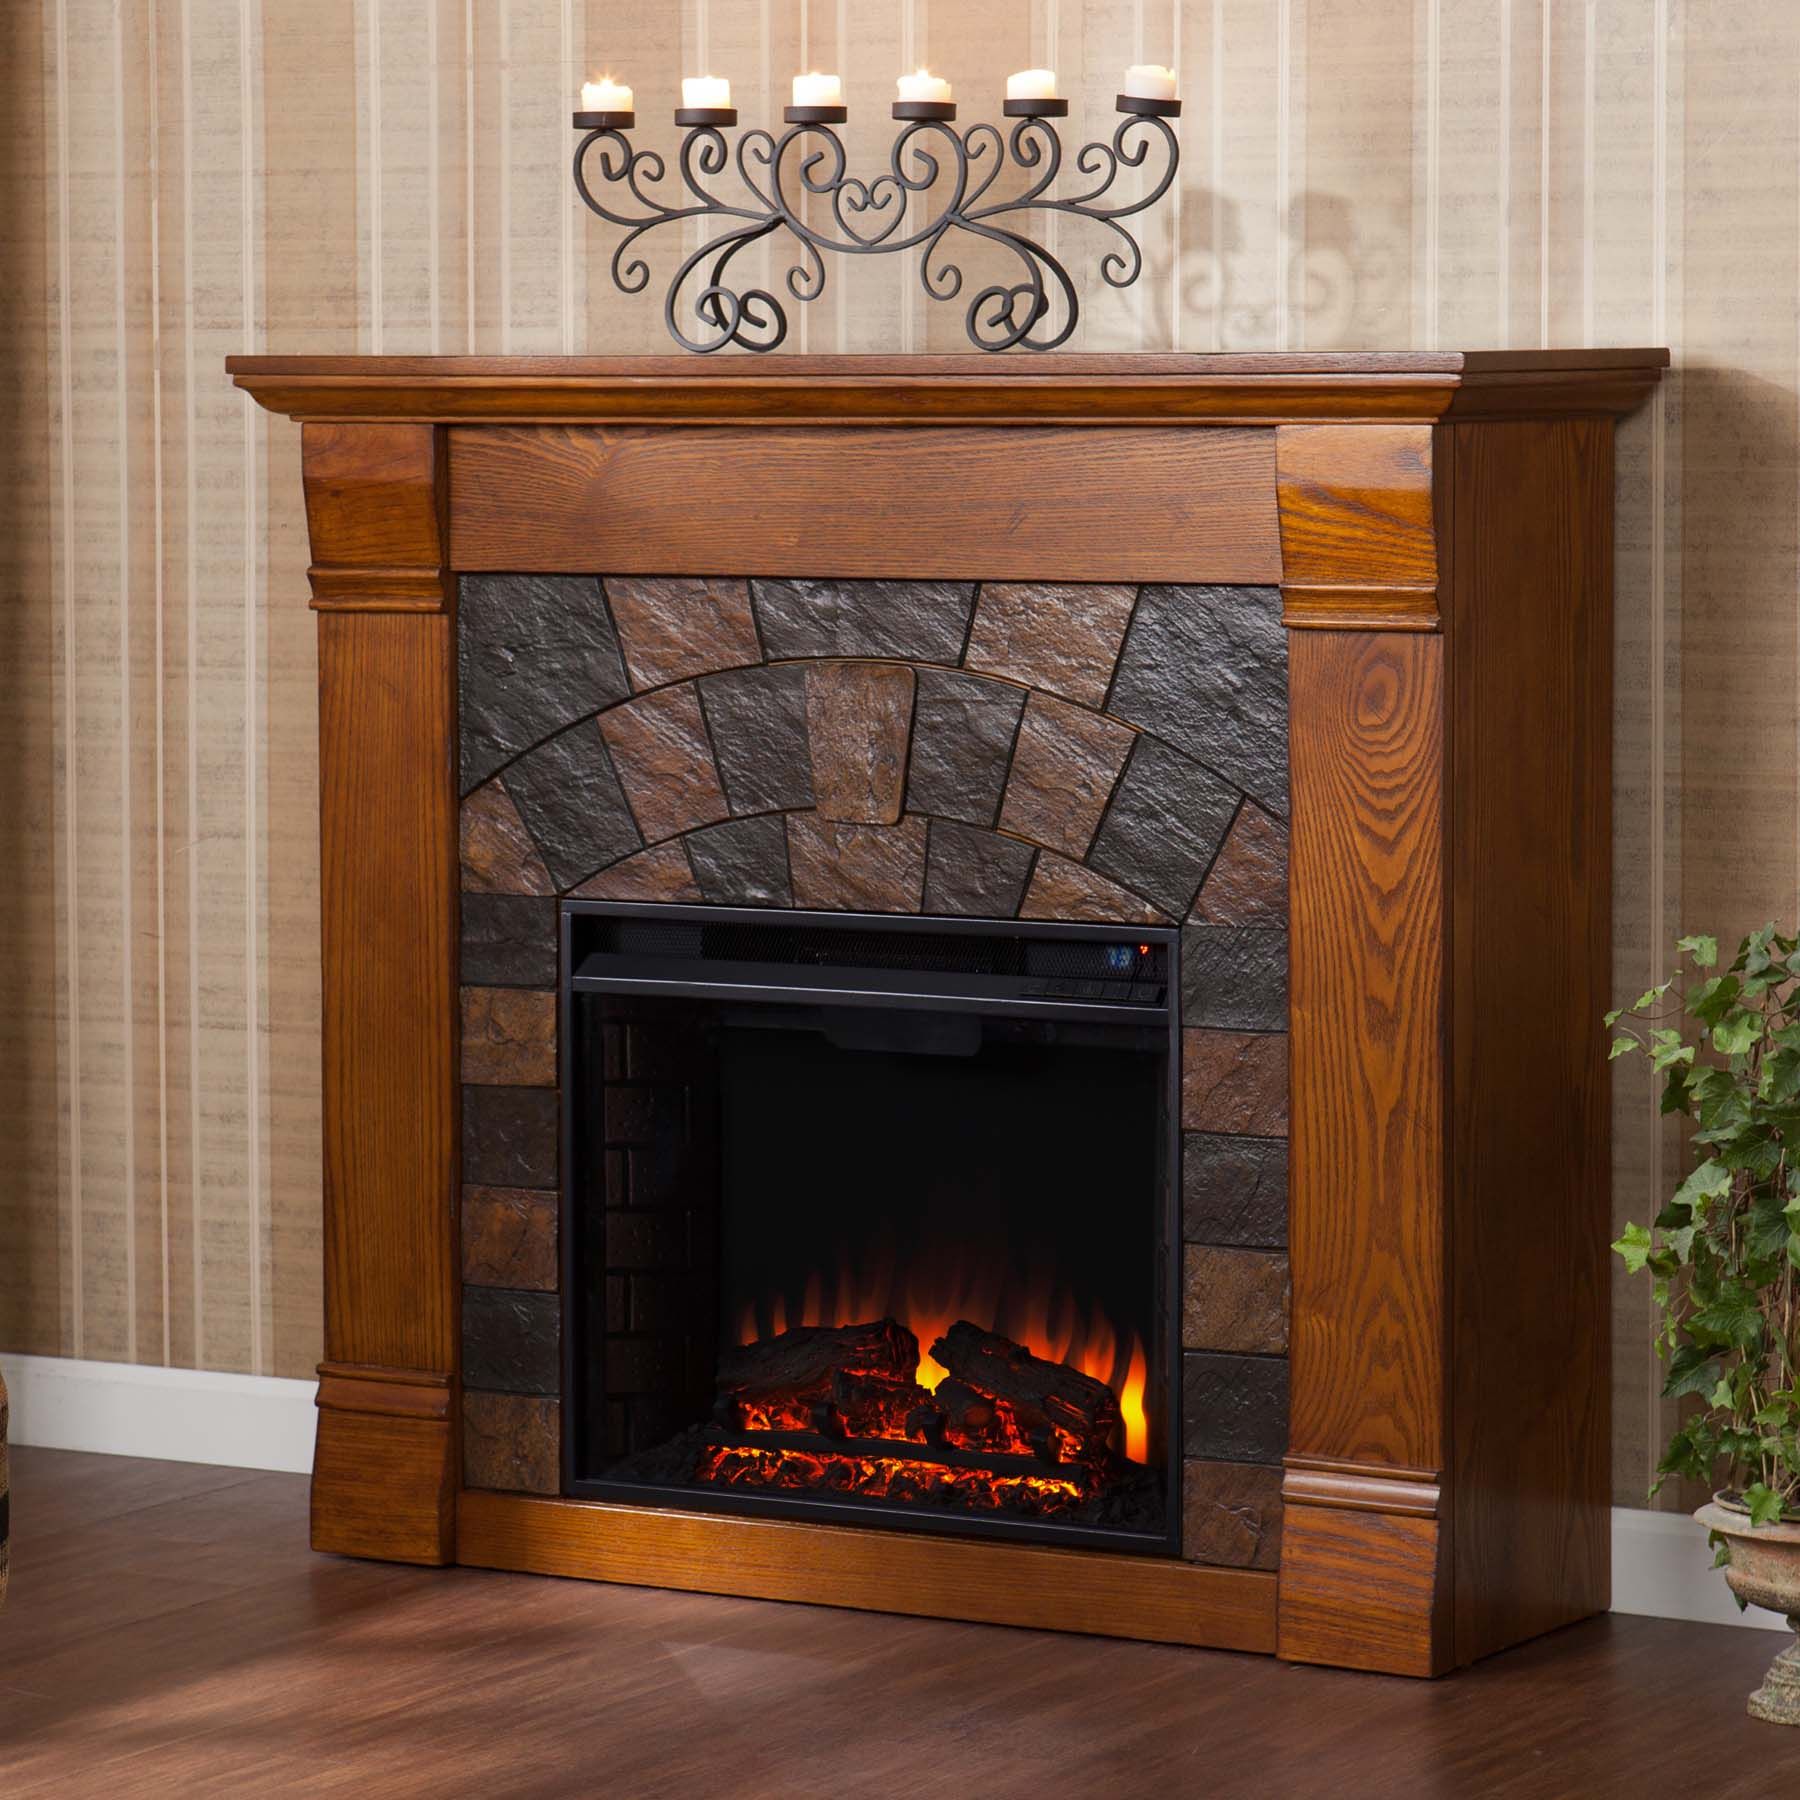 Kohls Fireplace Beautiful 42 Best Rustic Fireplace Images